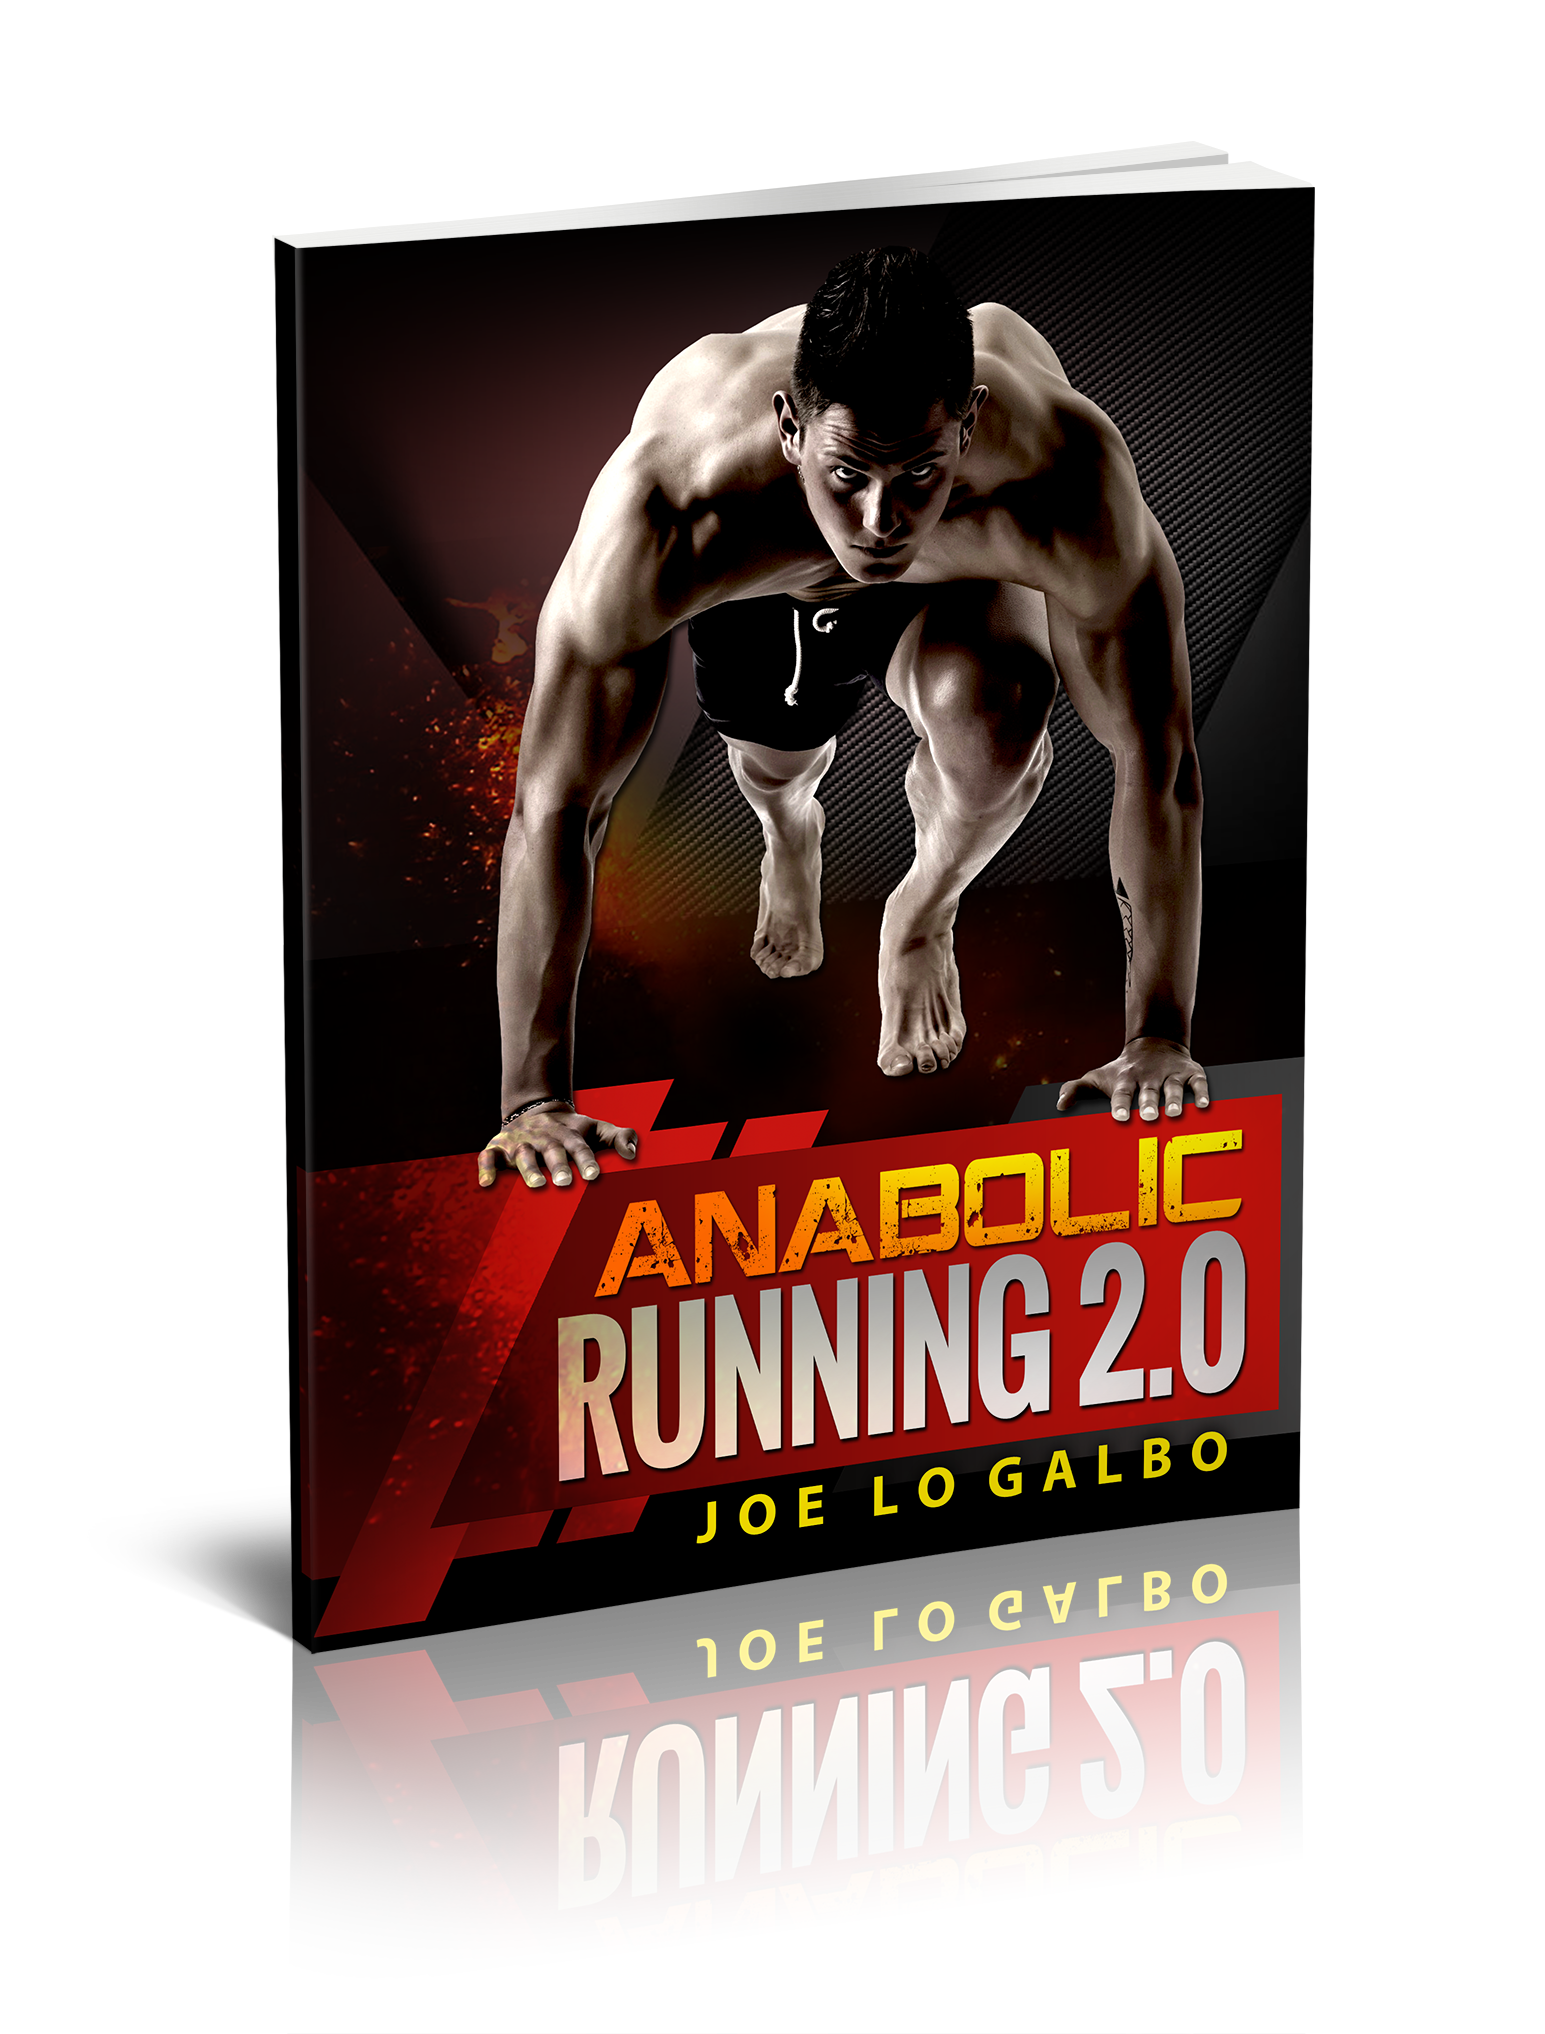 Anabolic Running 2.0 program